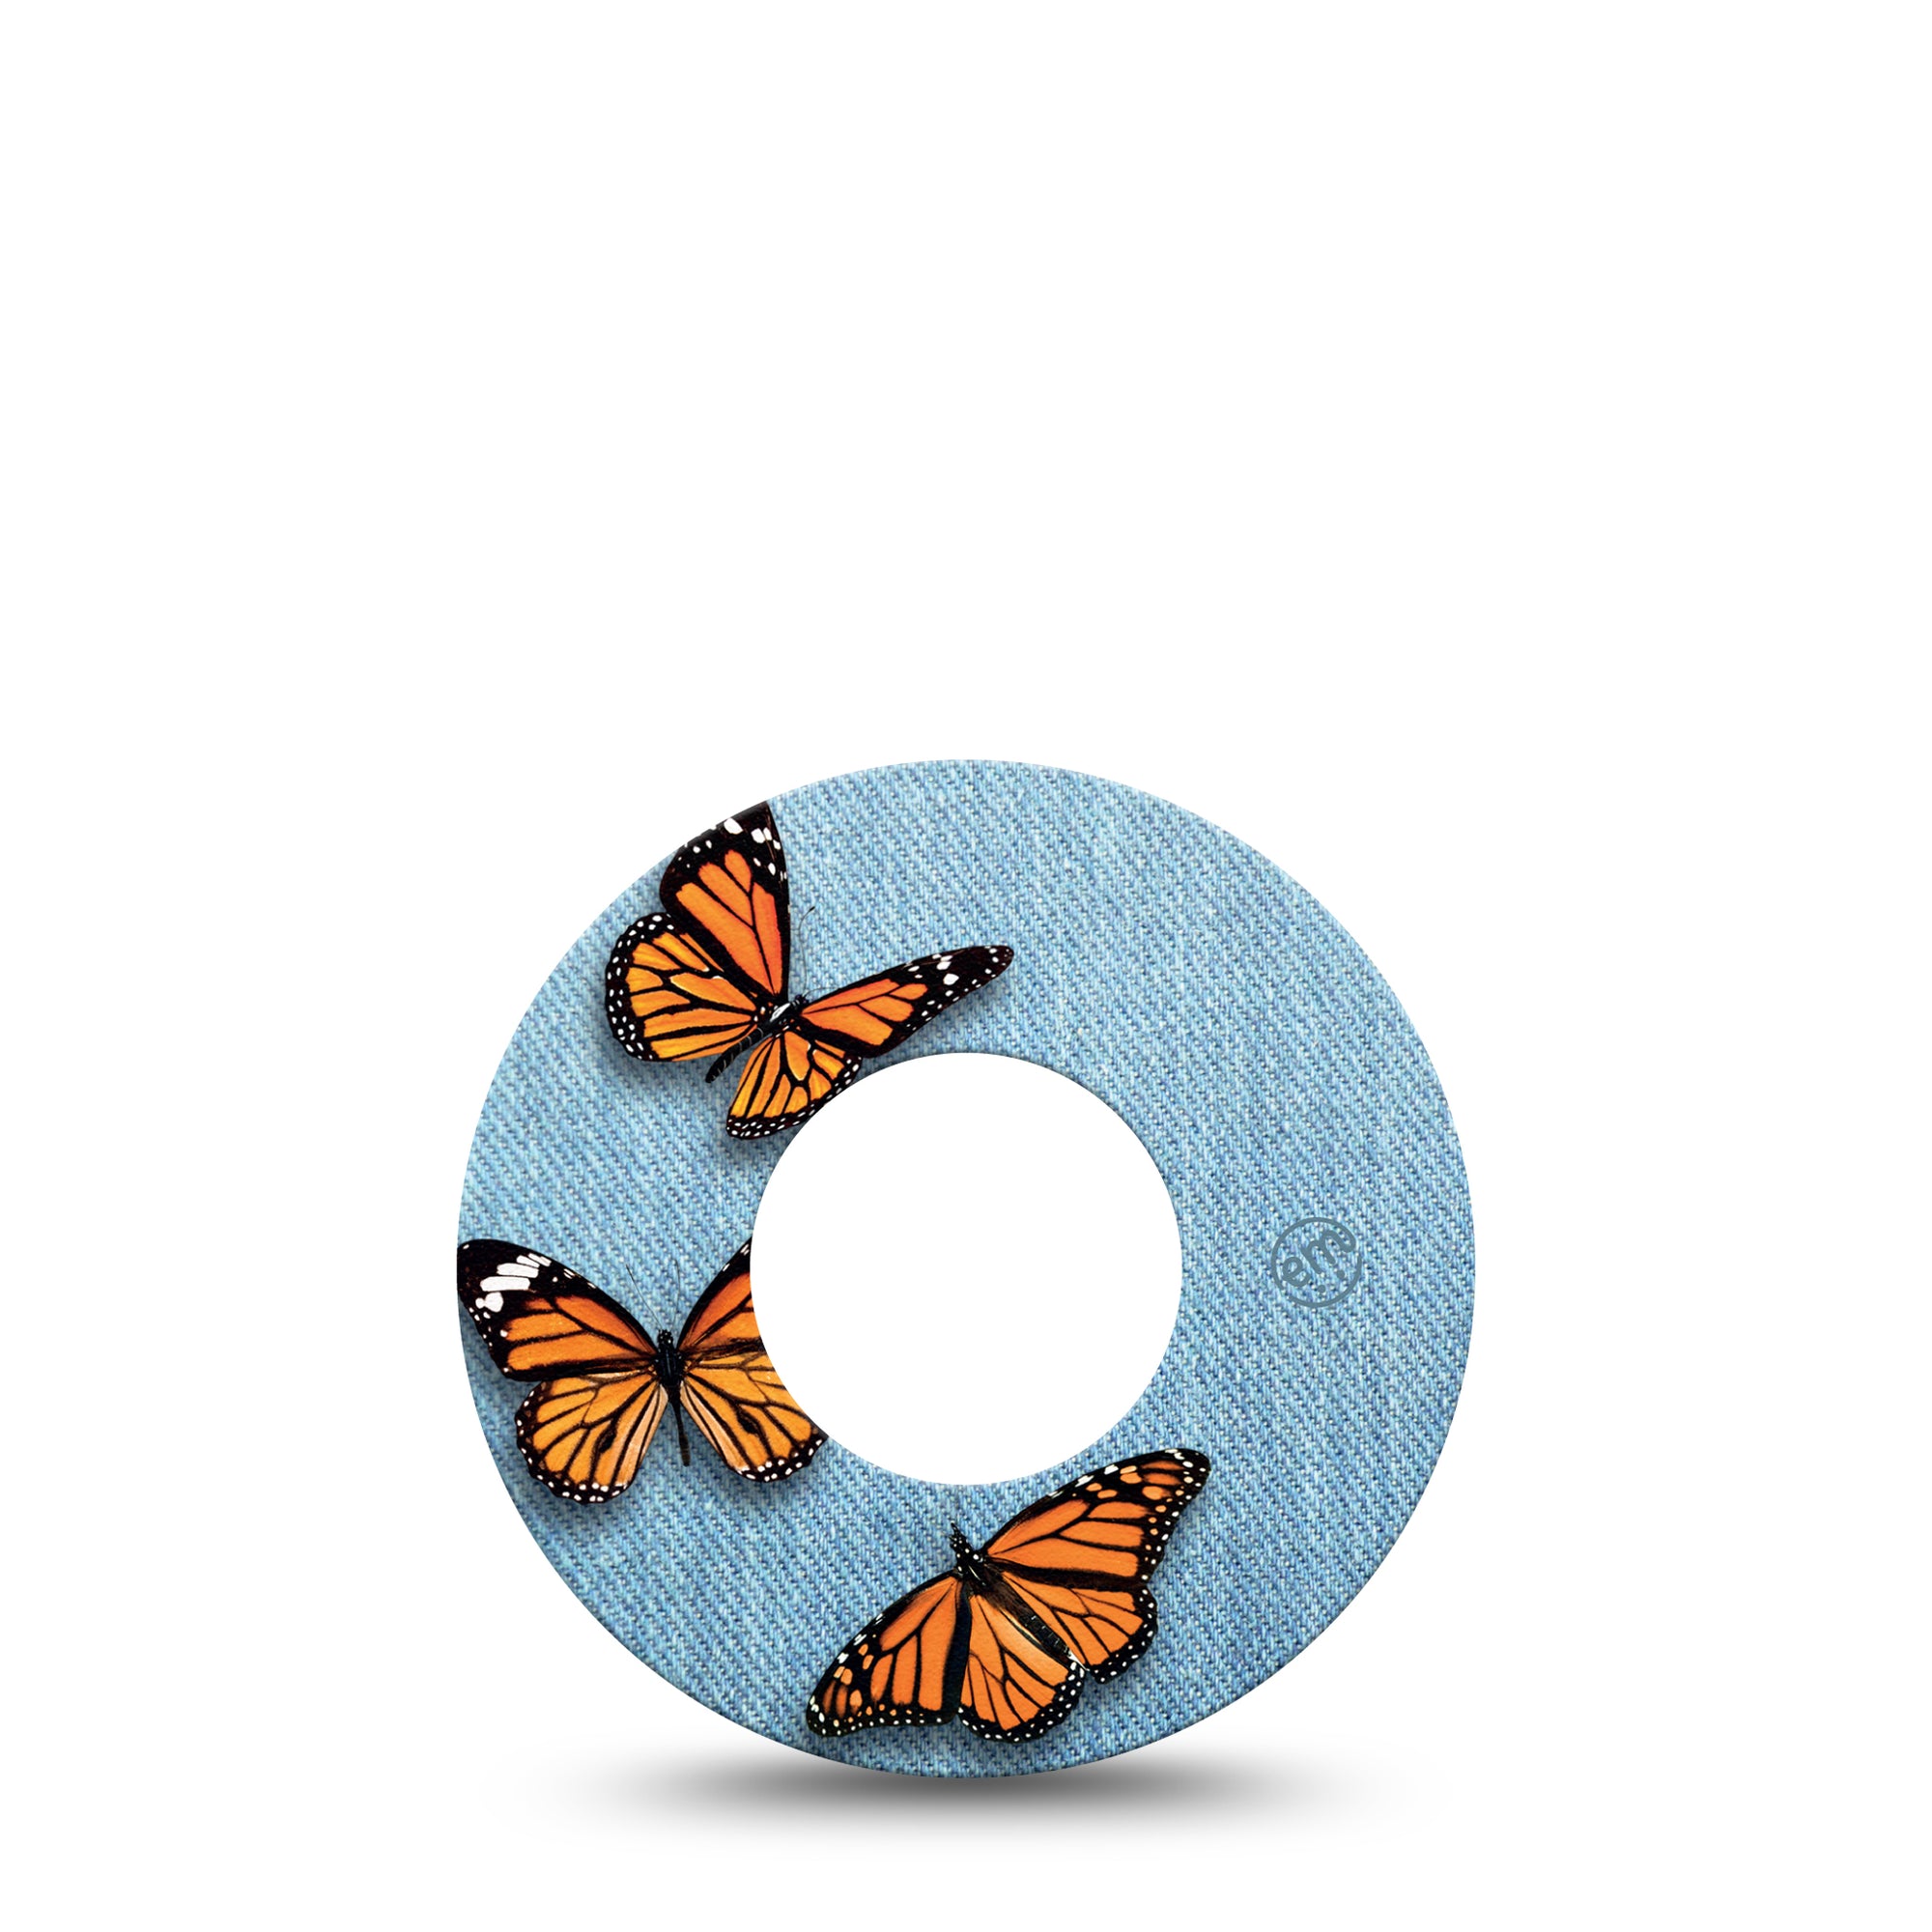 ExpressionMed Denim & Monarchs Libre Freestyle CGM Patch butterflies for girls, Abbott Lingo